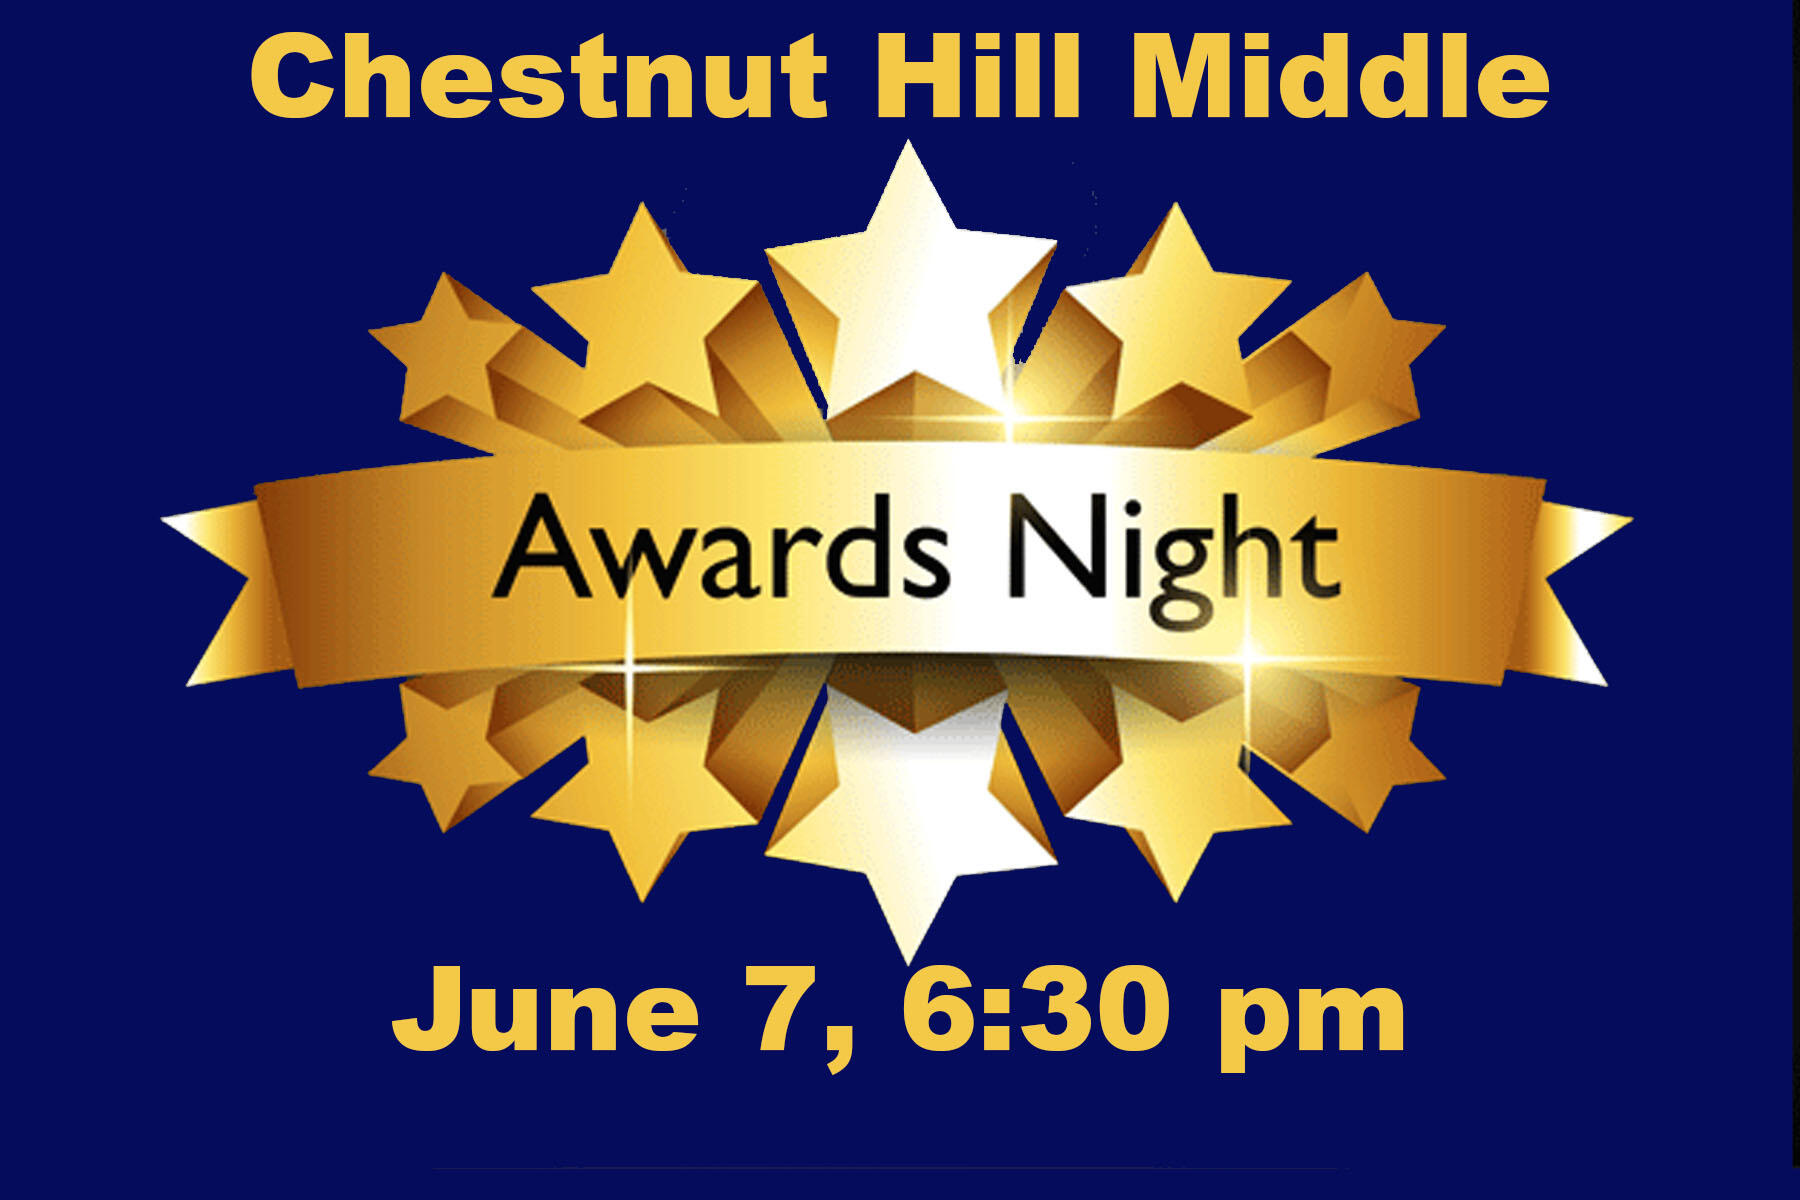 Awards Night June 7 6:30 pm